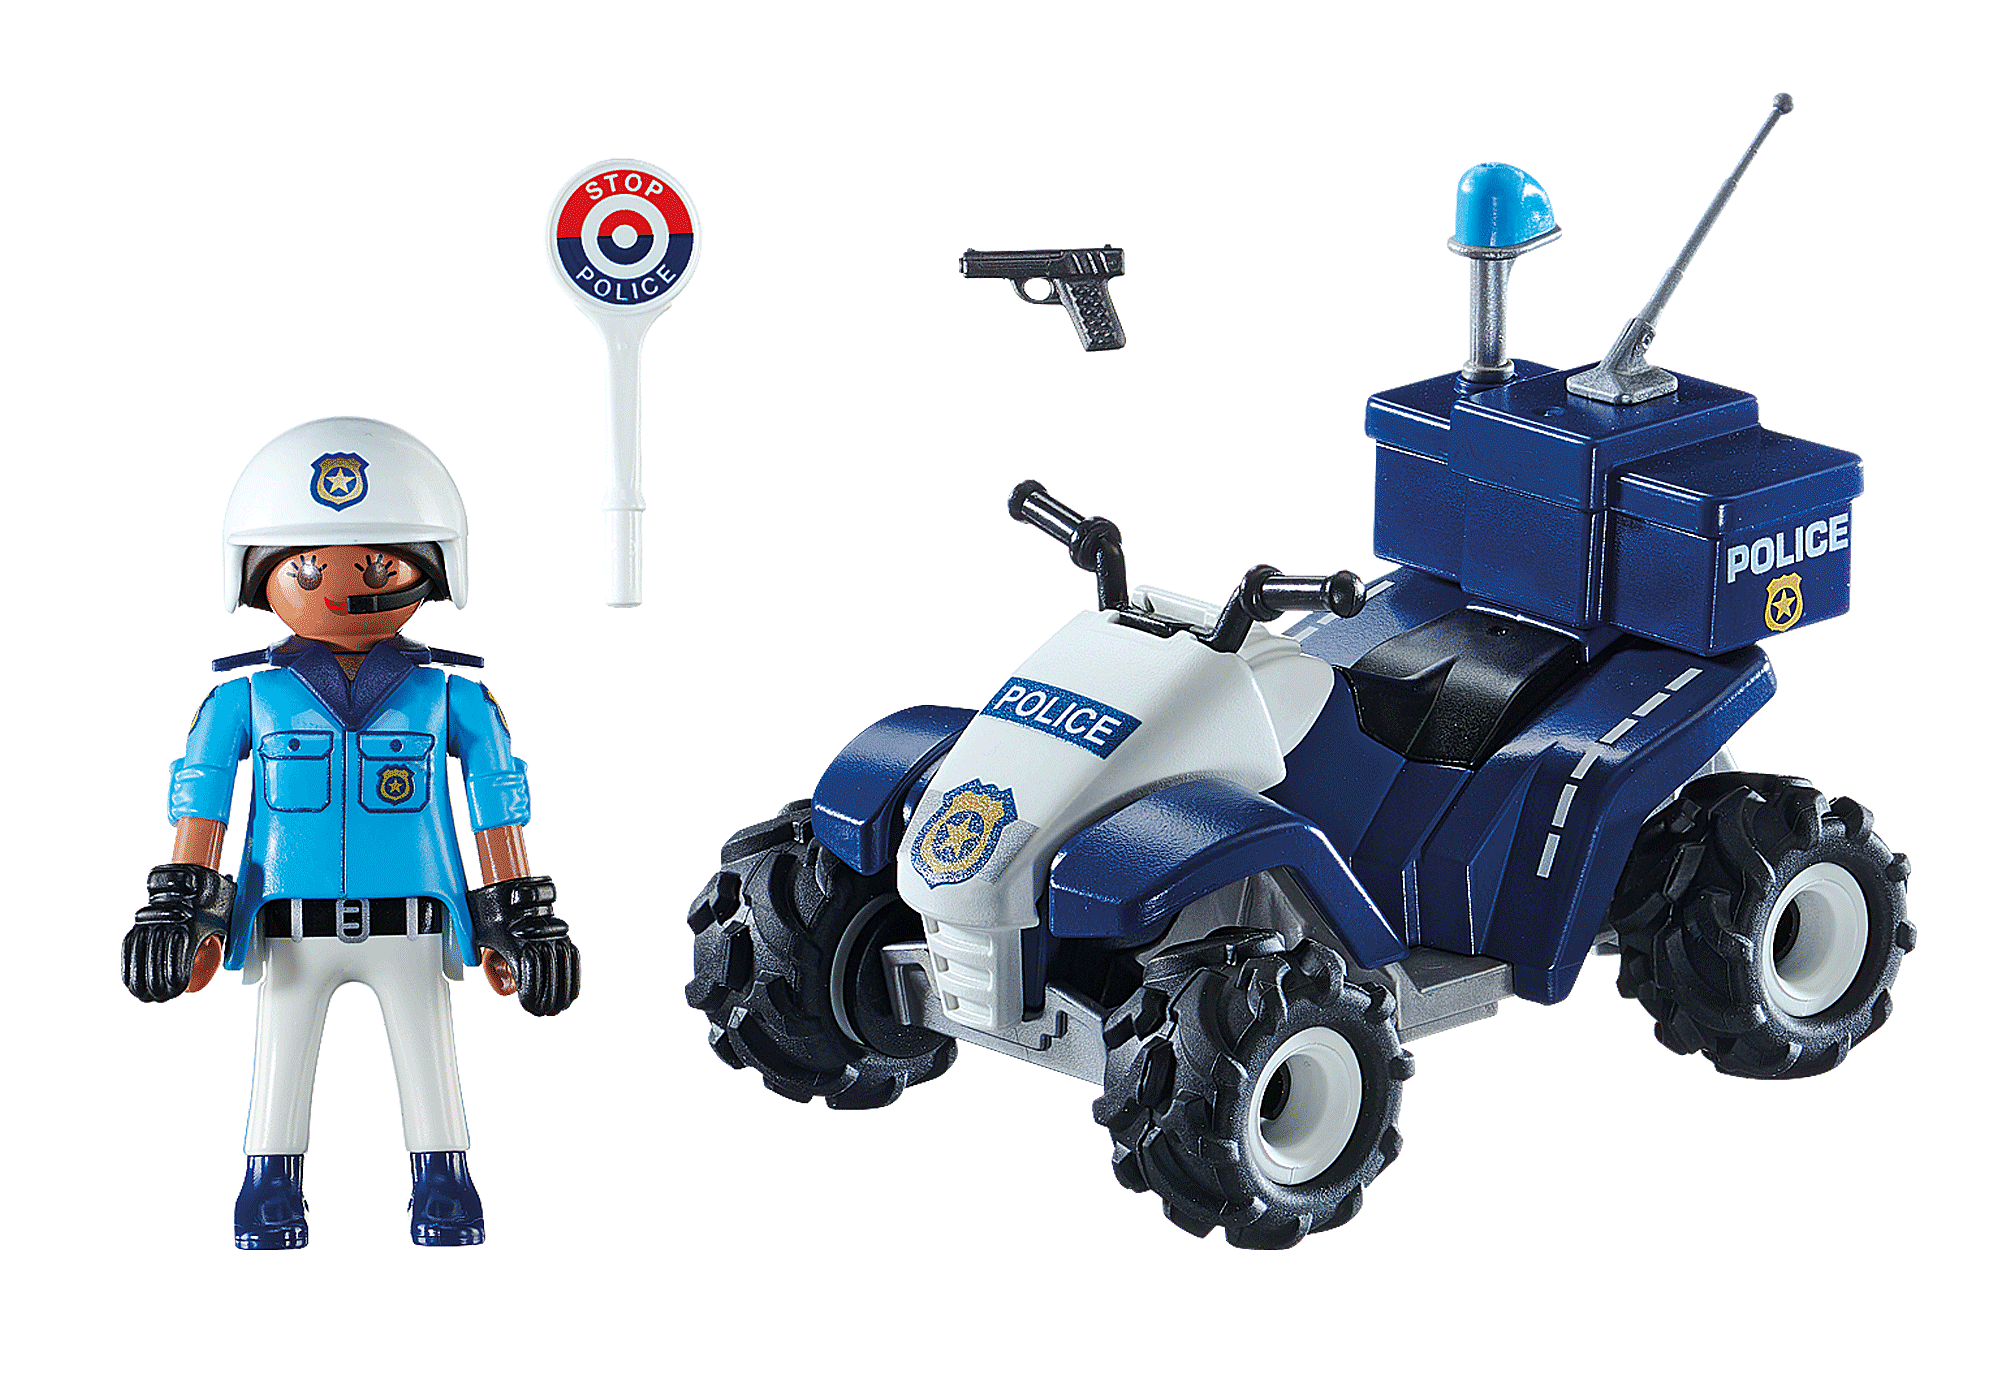 Playmobil Police Quad 71092